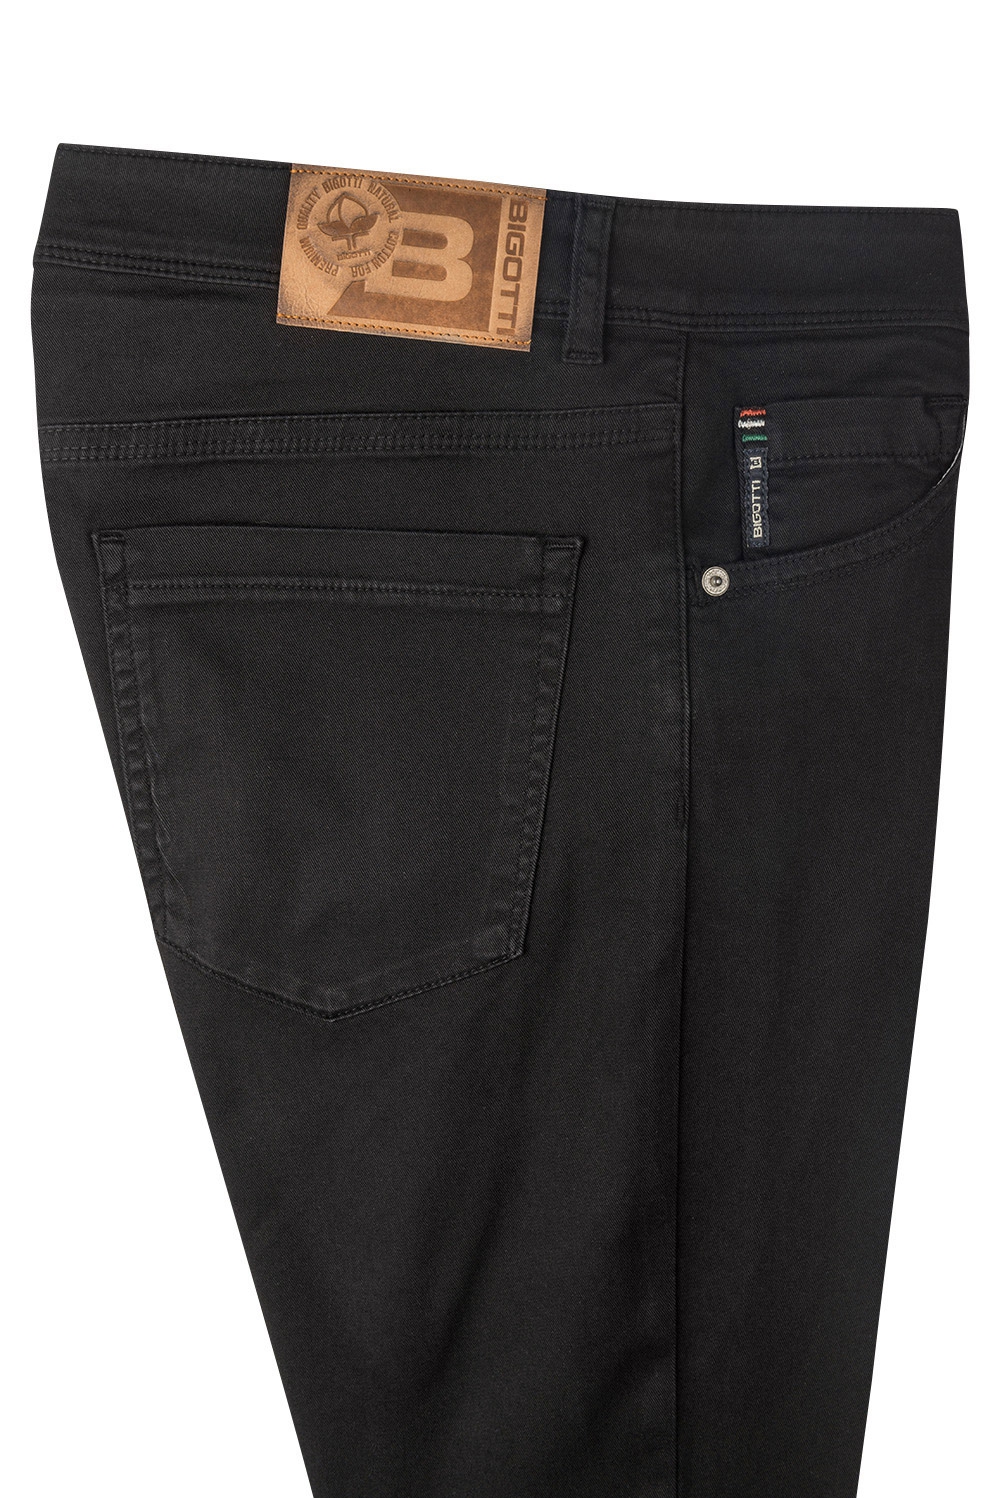 Black plain trouser 3